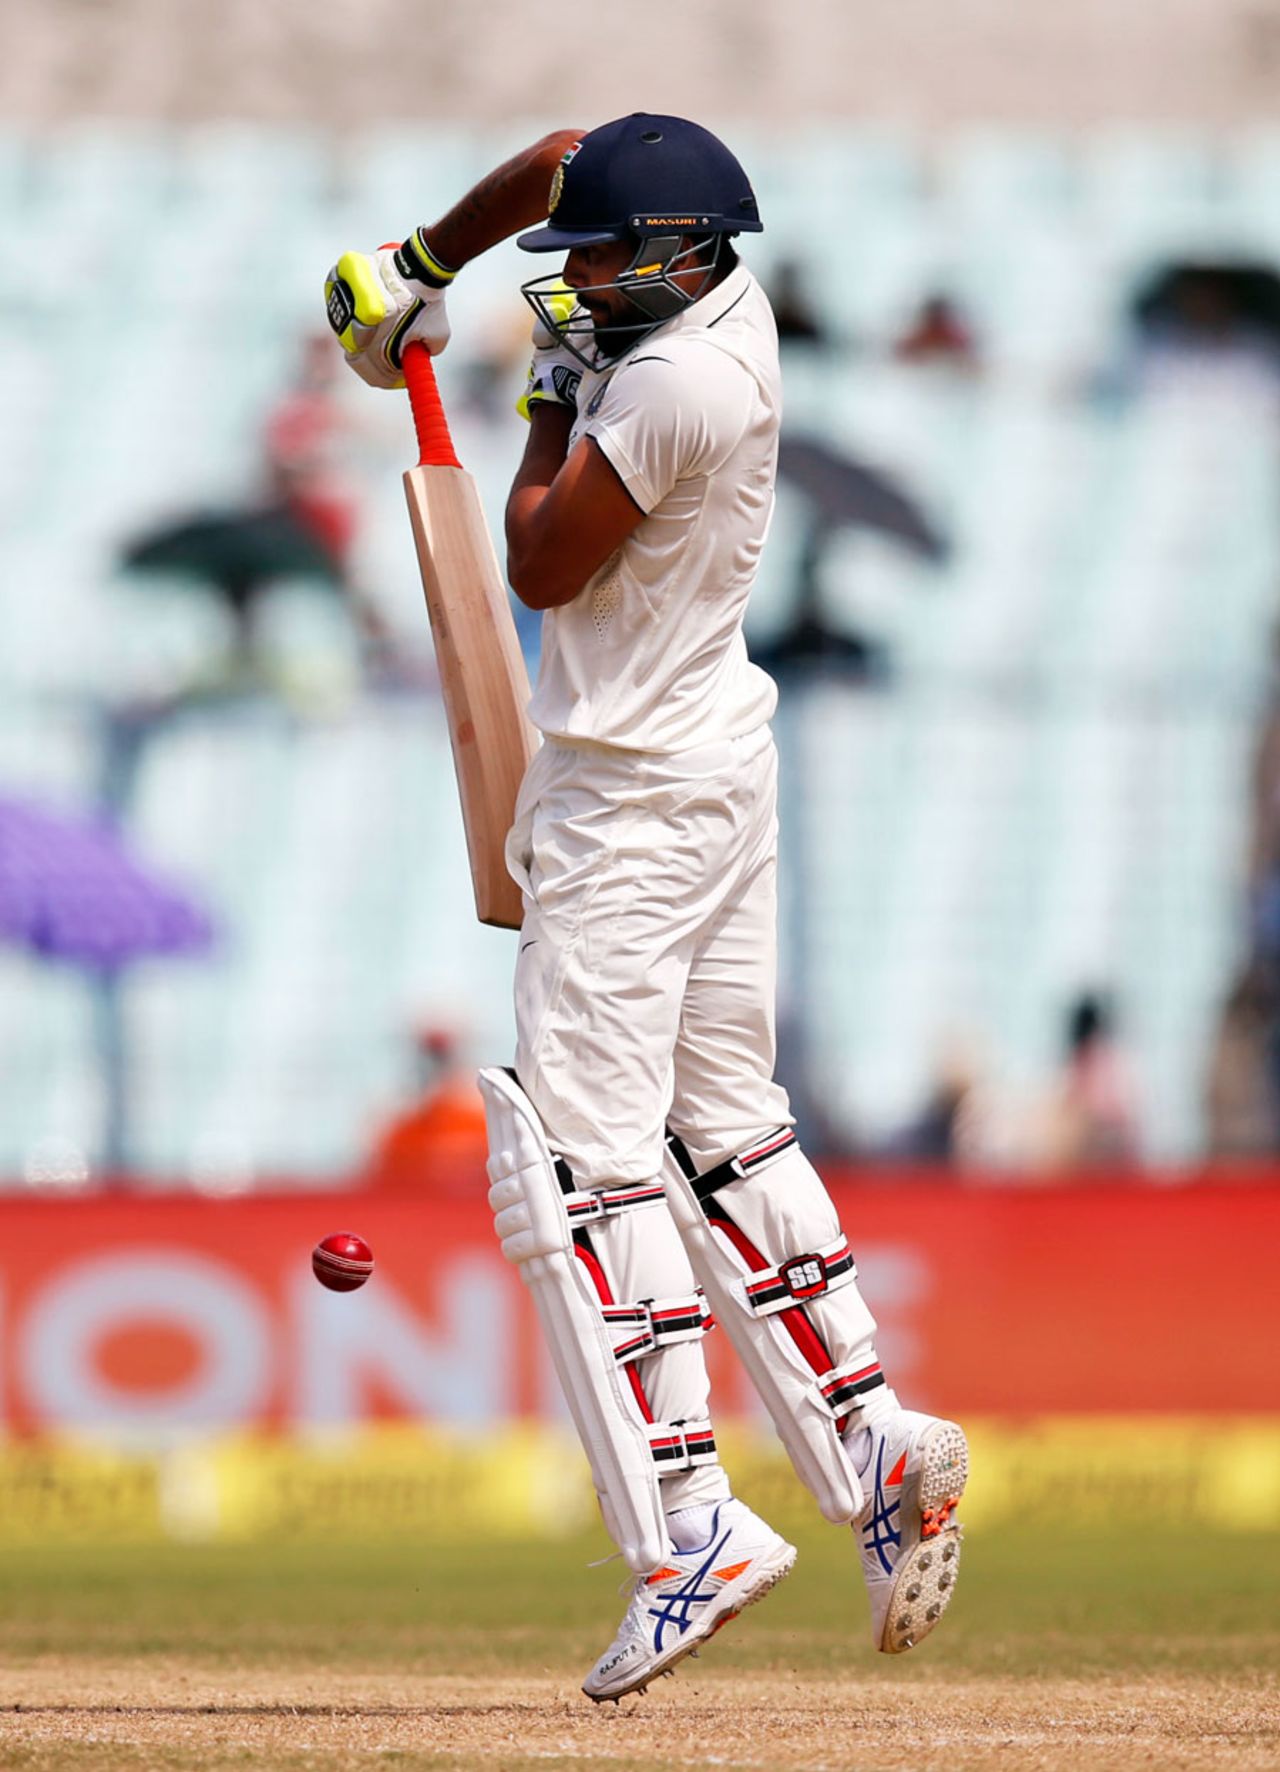 Ravindra Jadeja gets on his toes and defends, India v New Zealand, 2nd Test, Kolkata, 2nd day, October 1, 2016